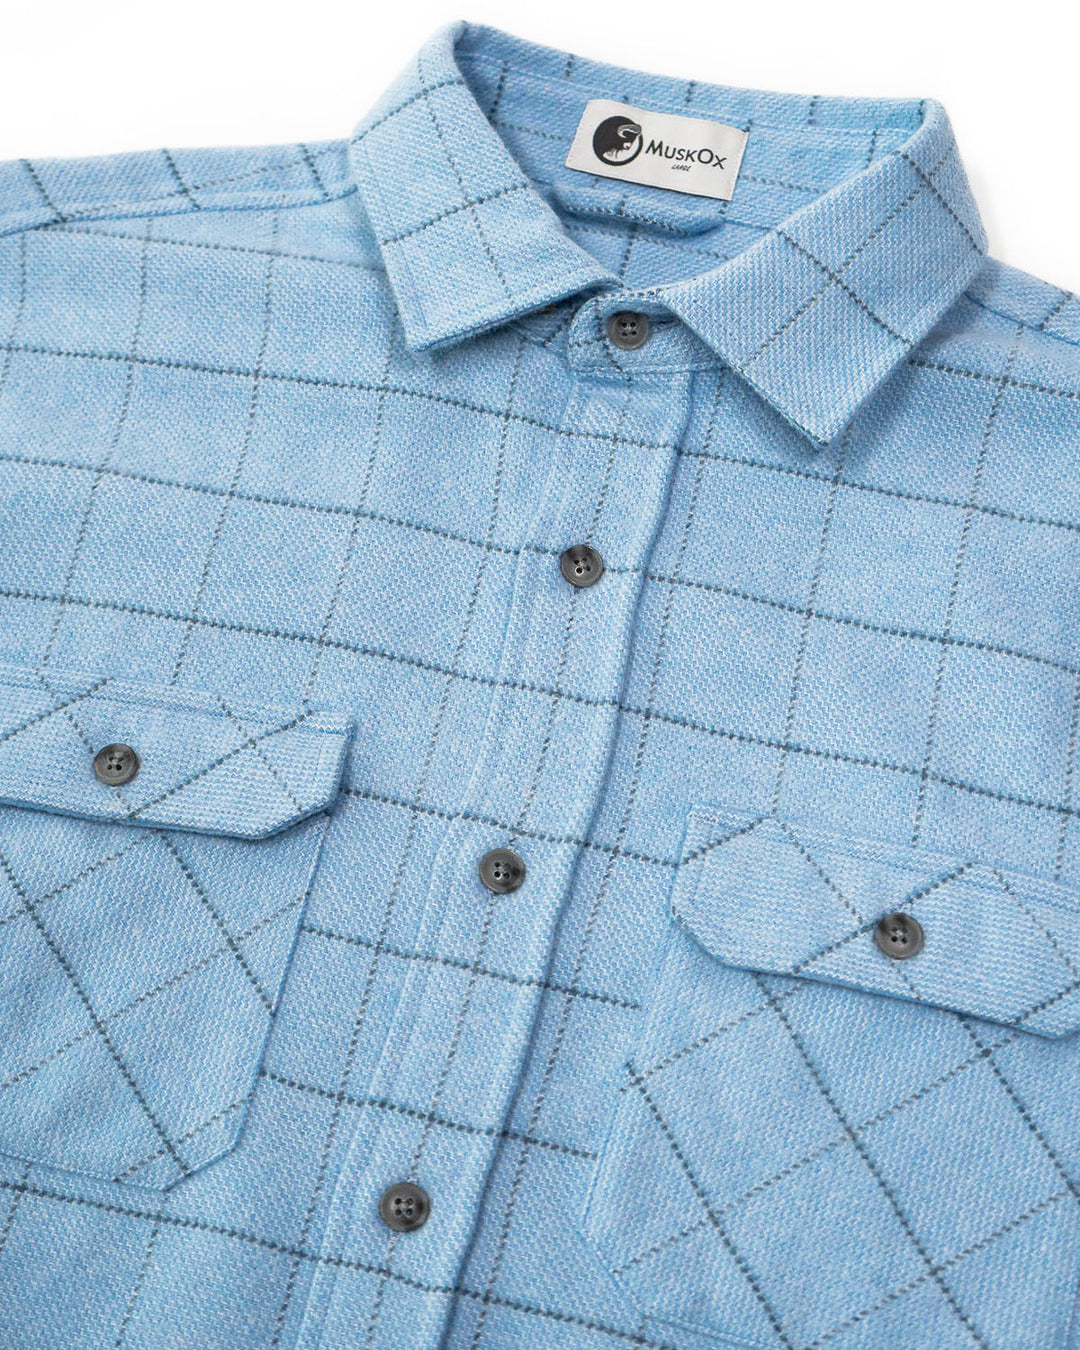 The Grand Flannel Shirt in Glacier, Cotton Flannel for Men